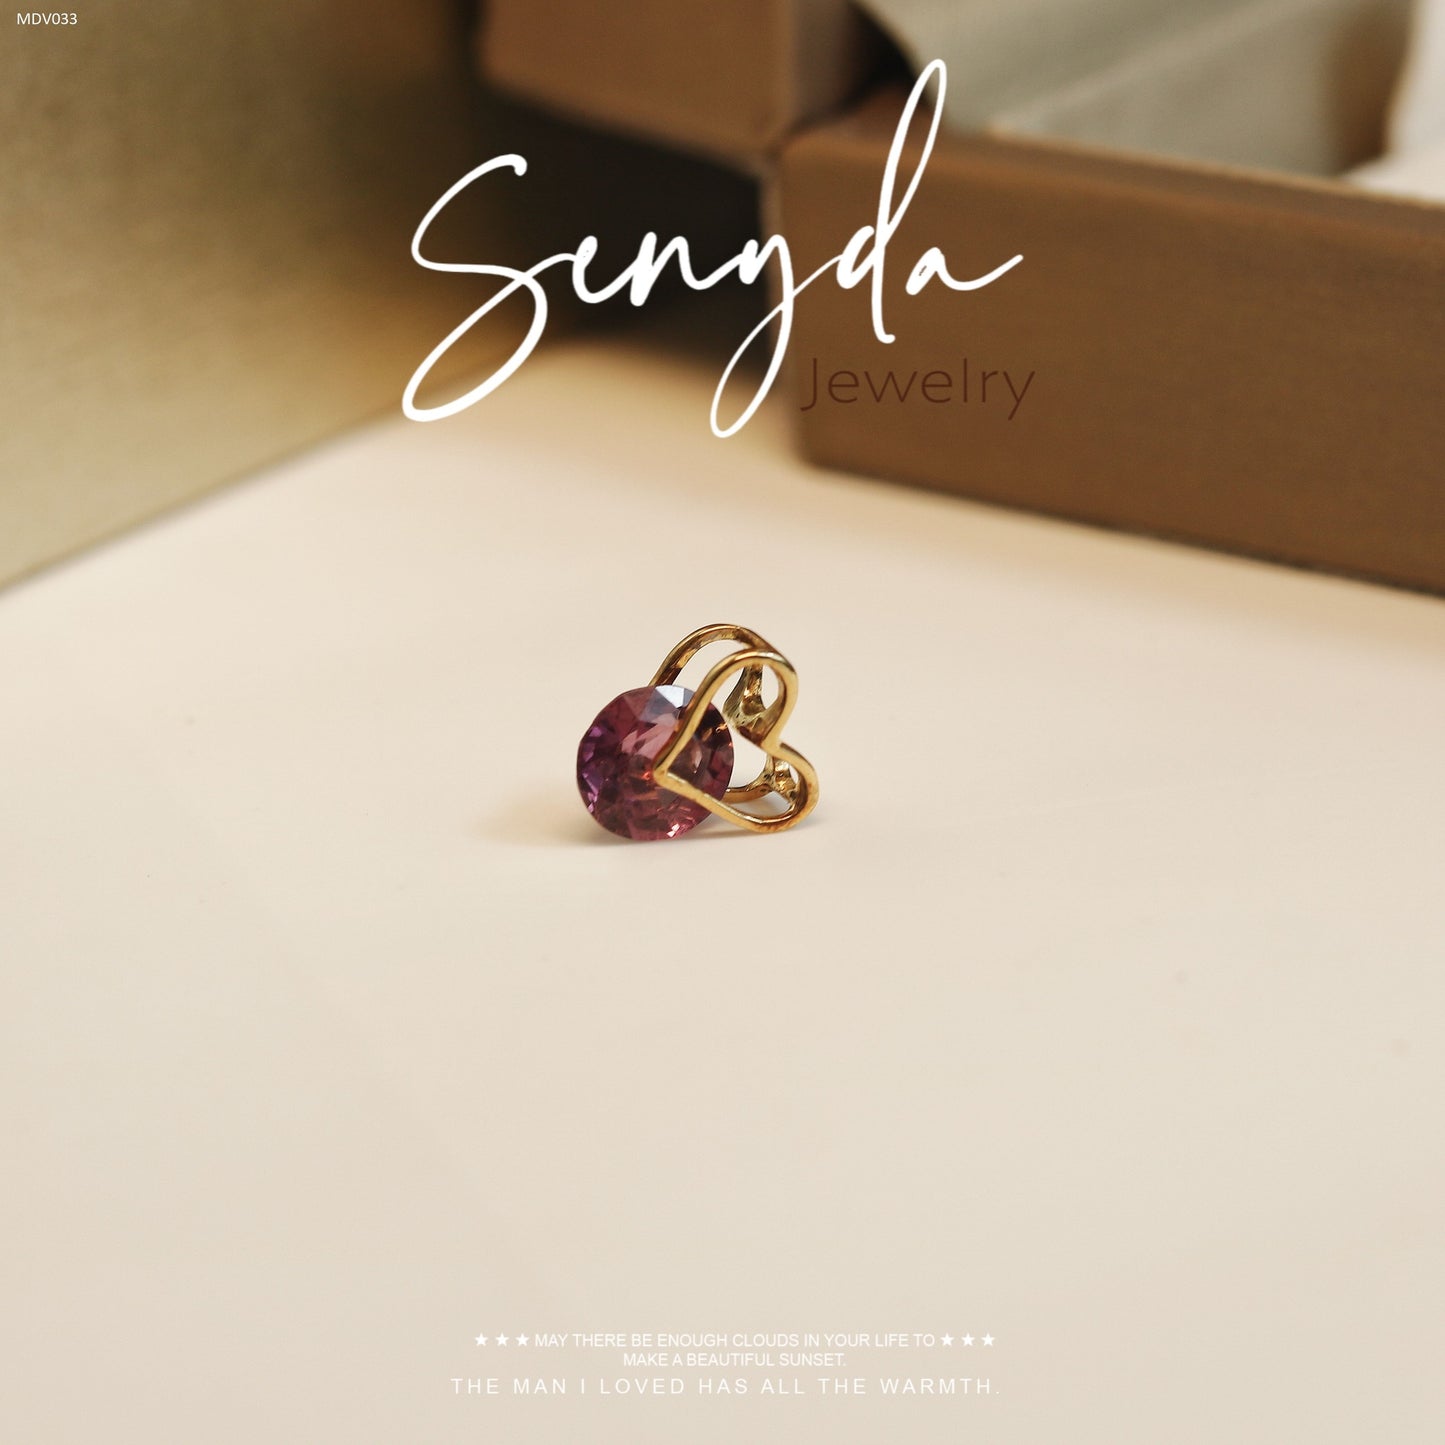 Senyda 10K/14K Solid Gold Cute Heart Pendant